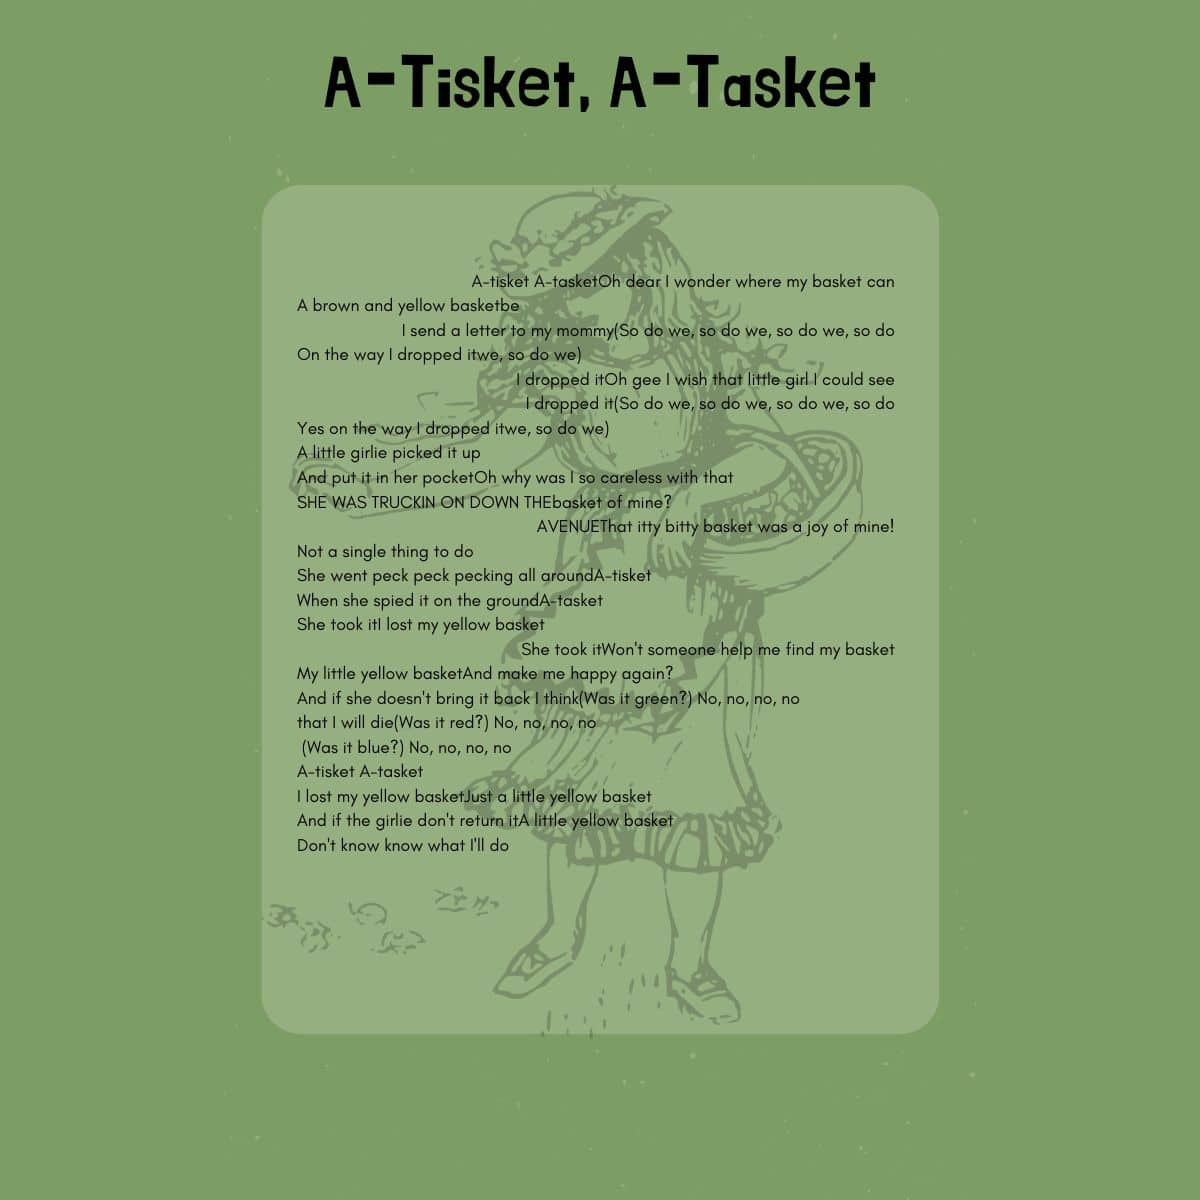 A Tisket A Tasket Lyrics on Green and White Background